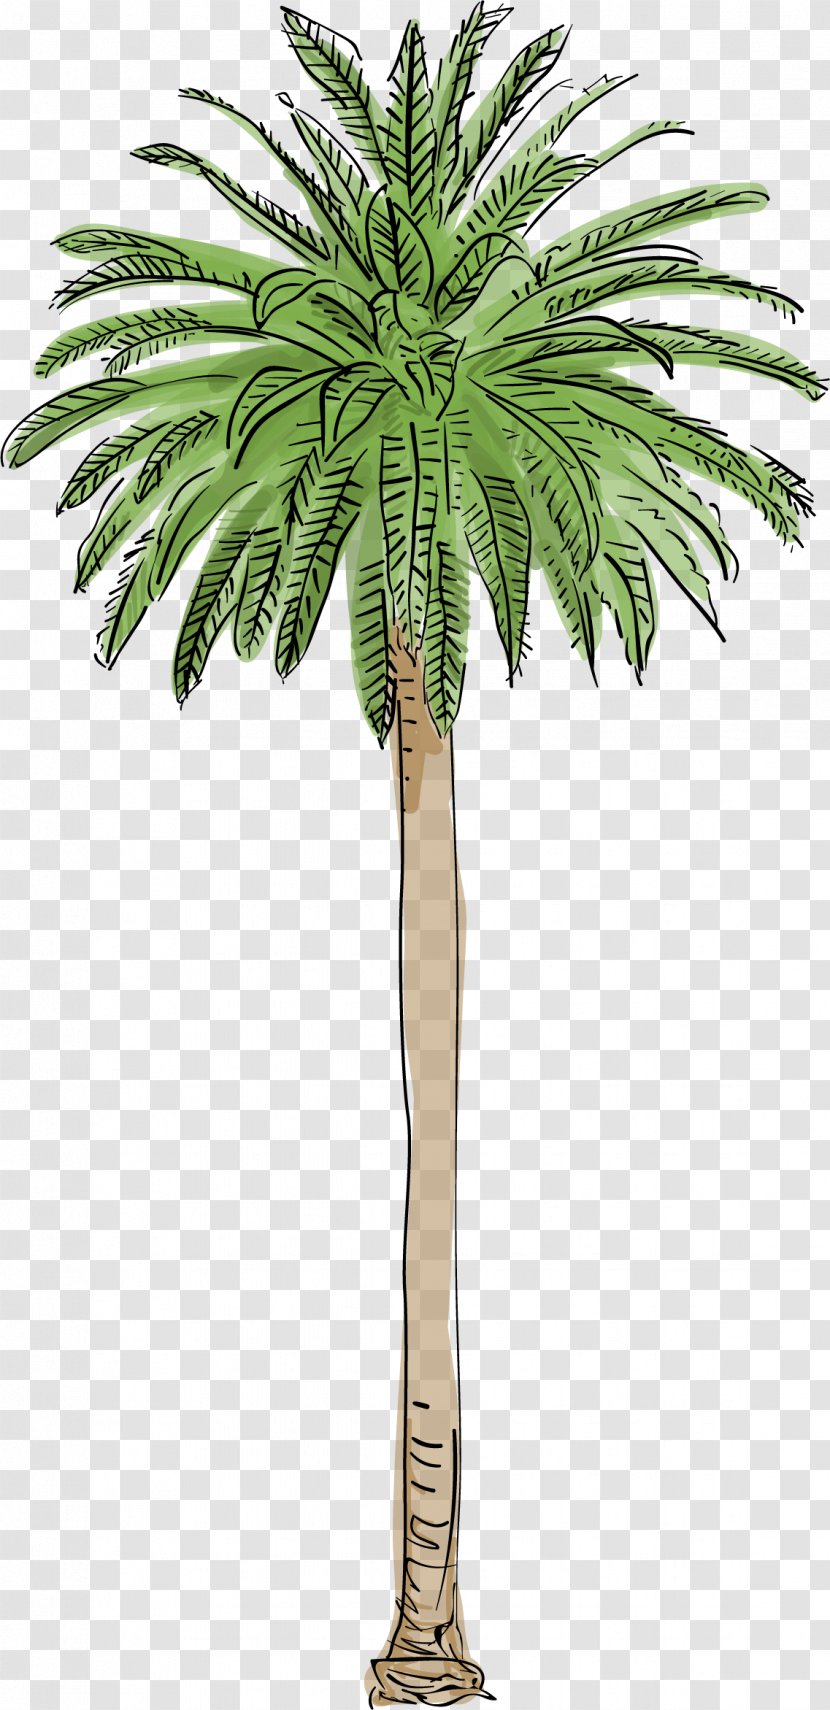 Los Angeles Washingtonia Filifera Robusta Arecaceae Tree - Date Palm Transparent PNG